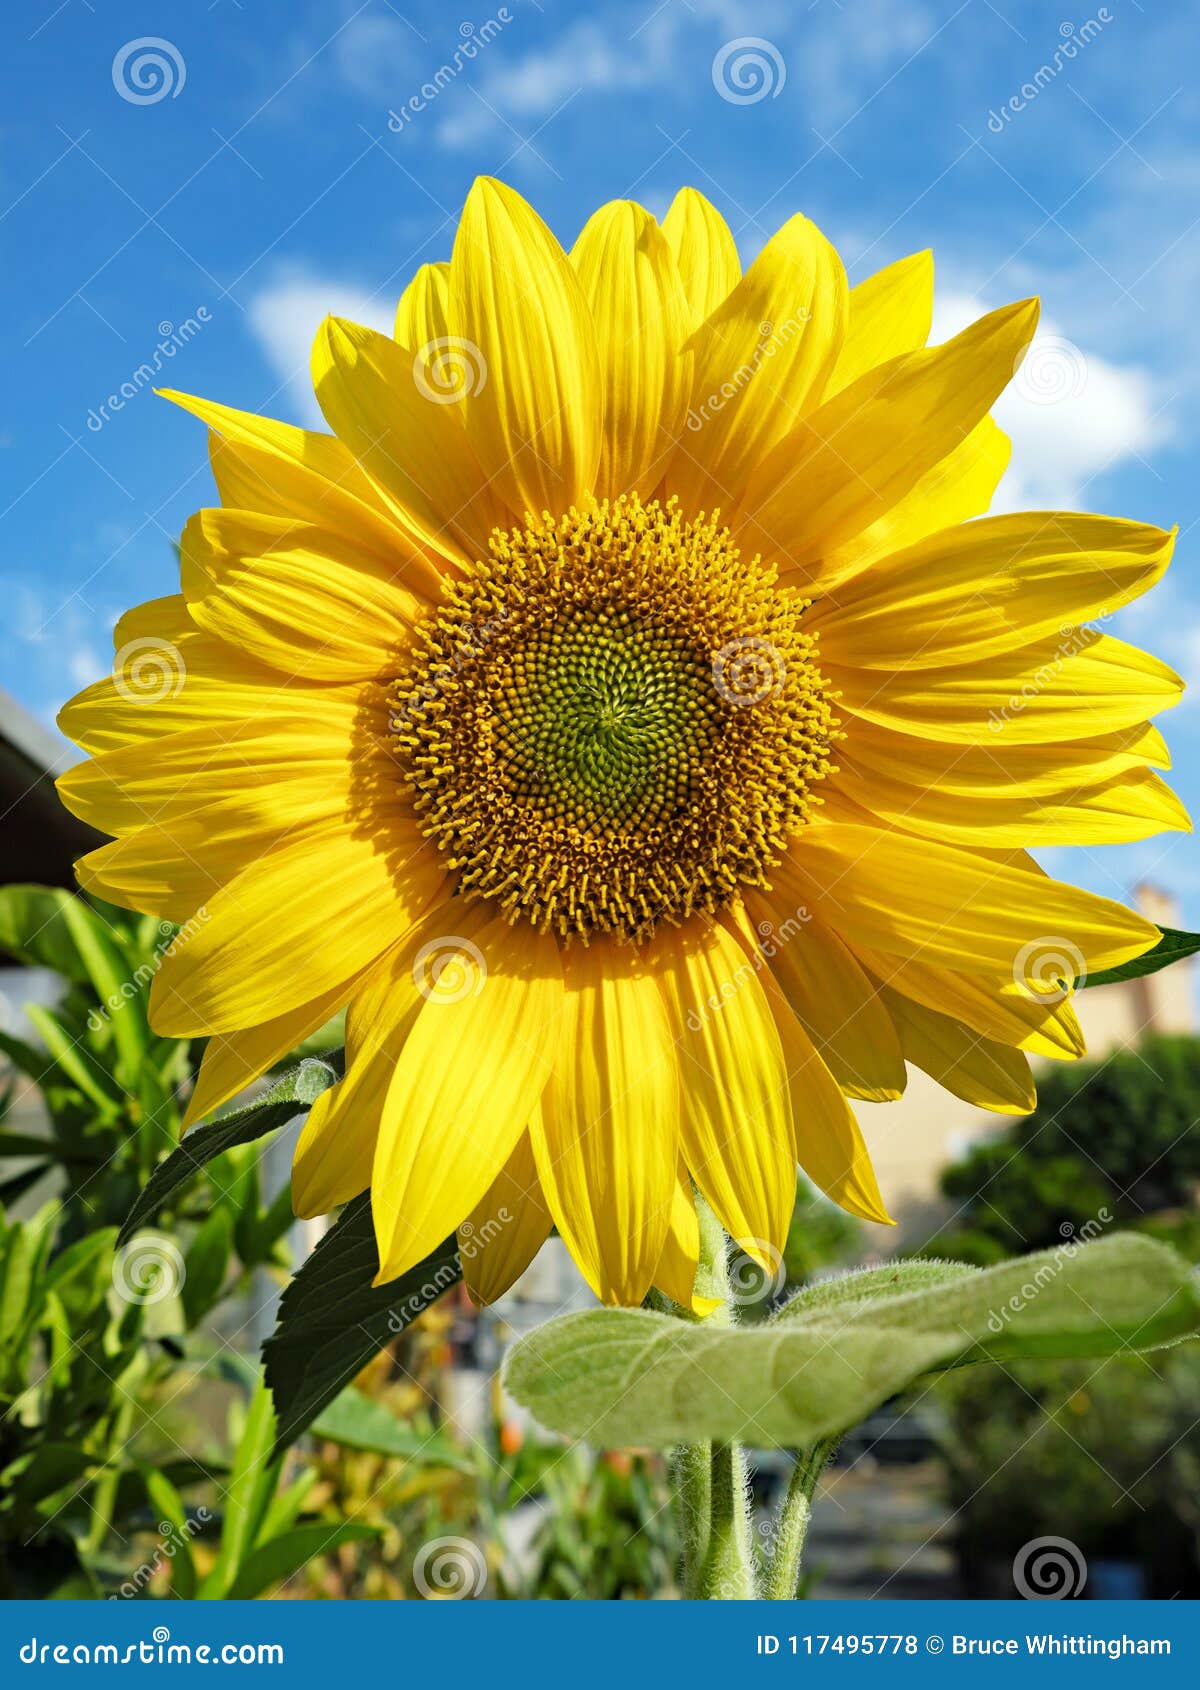 bright yellow sunflower growing in garden